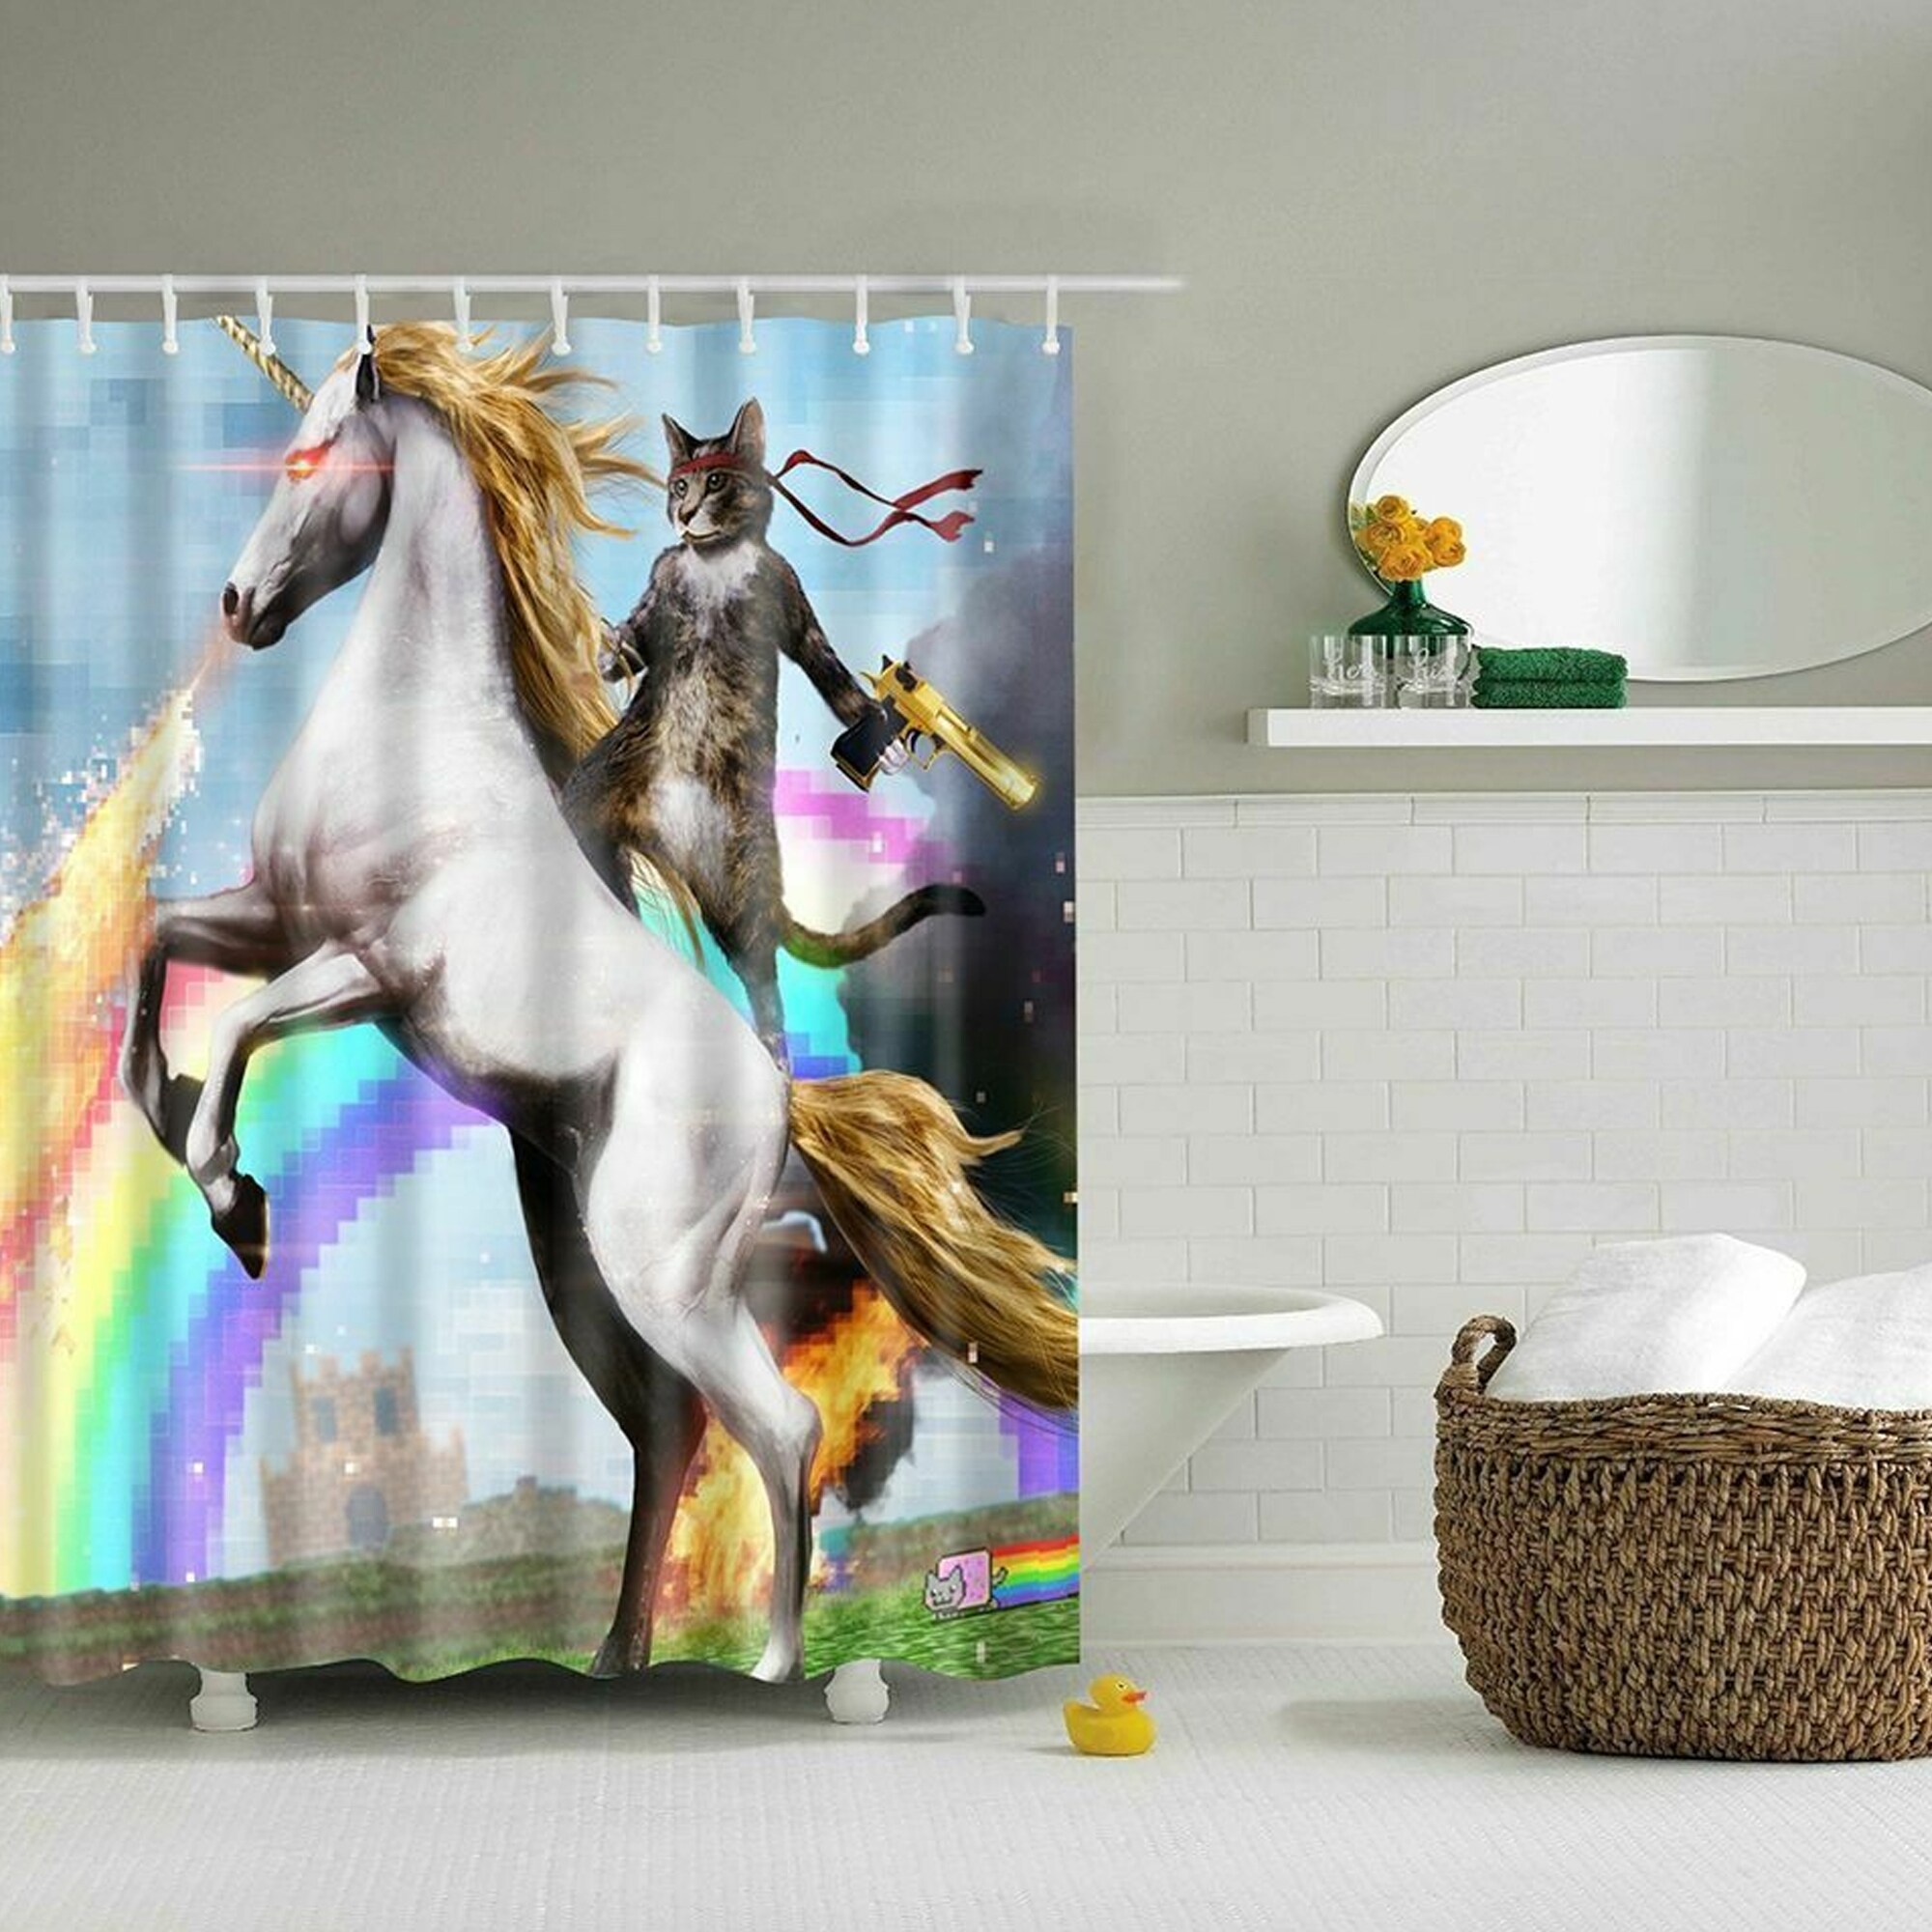 Cat Riding Unicorn Bathroom Shower Curtain Polyester Fabric Waterproof 12Hooks 